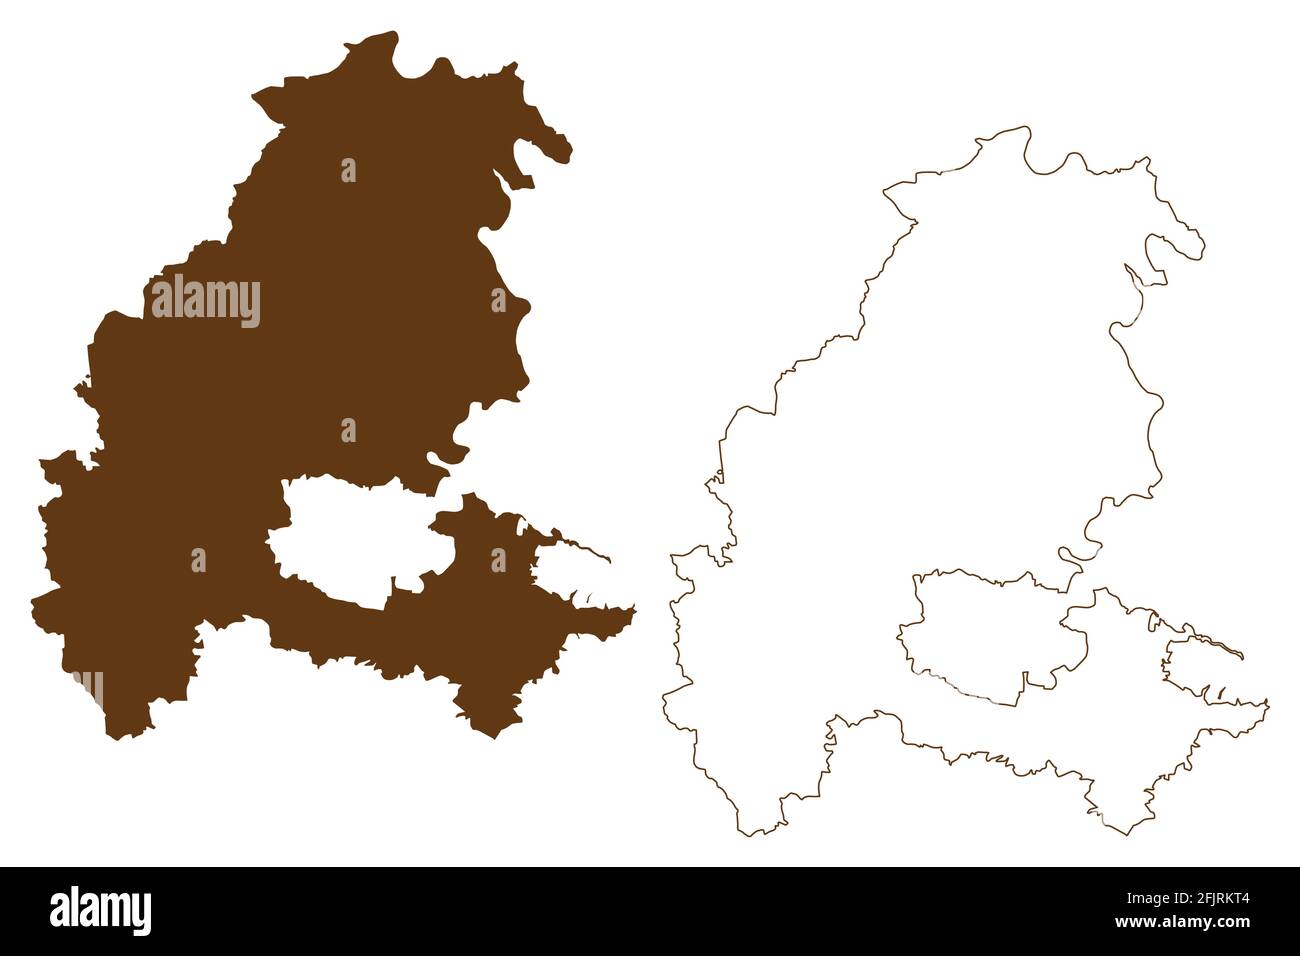 Distretto di Kassel (Repubblica federale di Germania, distretto rurale regione di Kassel, stato di Assia, Assia, Assia) illustrazione vettoriale mappa, abbozzare schizzo S Illustrazione Vettoriale